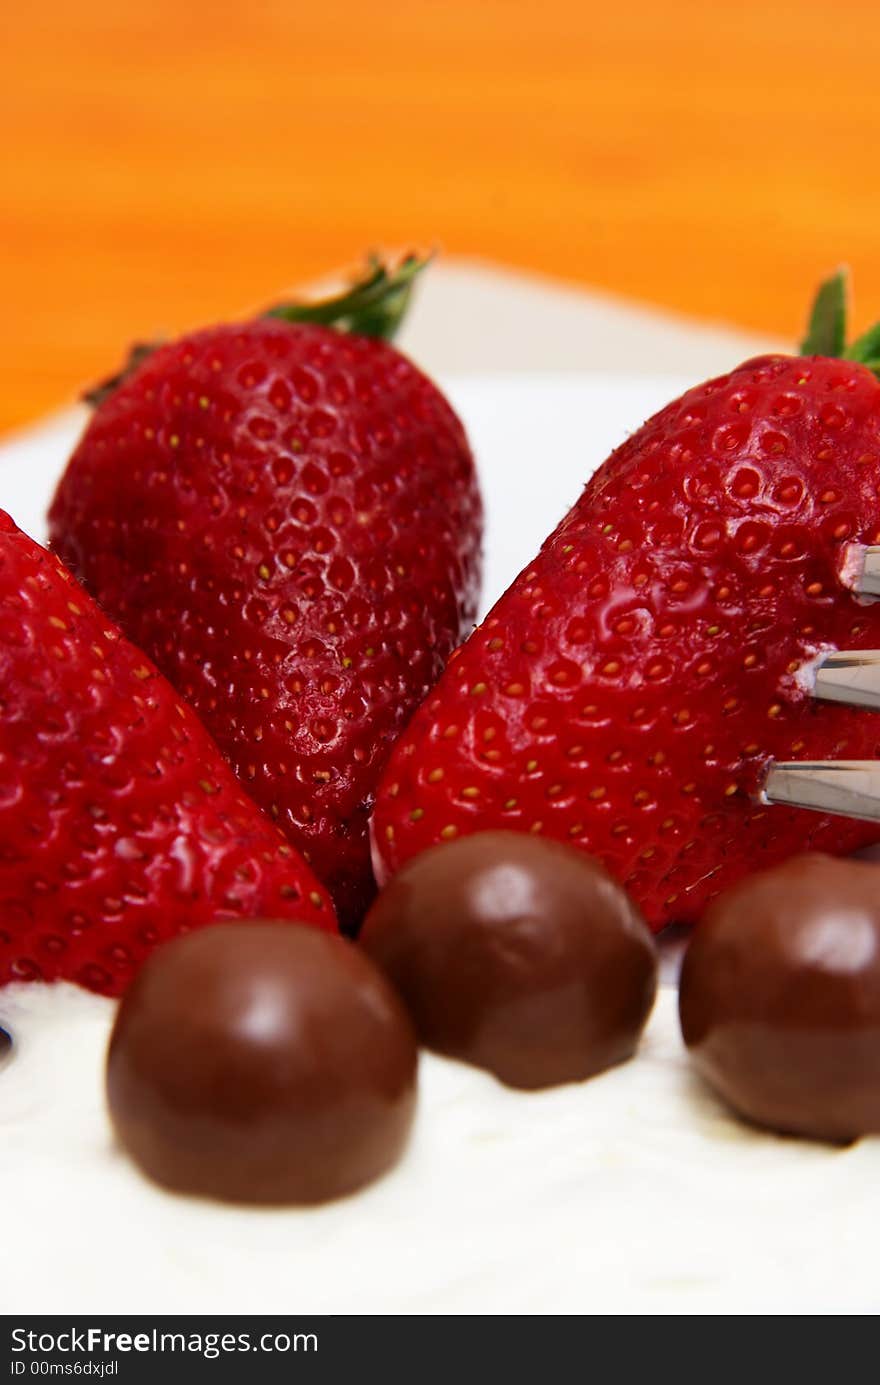 Three strawberries with chocolate balls lying in cream on white saucer. Three strawberries with chocolate balls lying in cream on white saucer